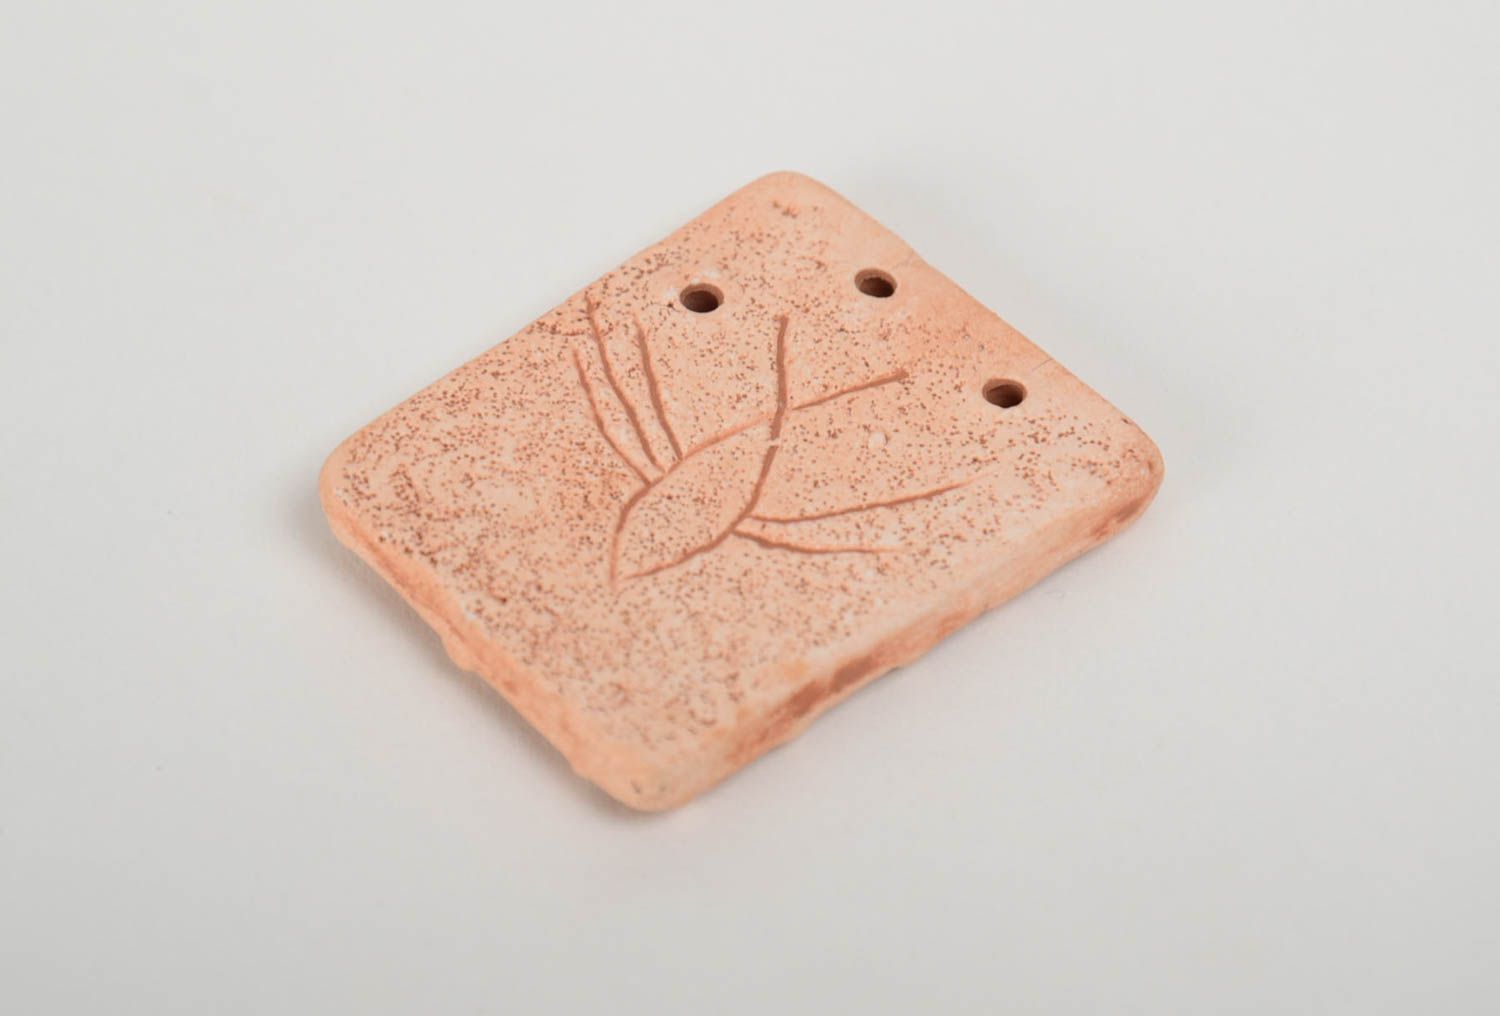 Homemade designer clay craft blank pendant DIY jewelry making supplies photo 3